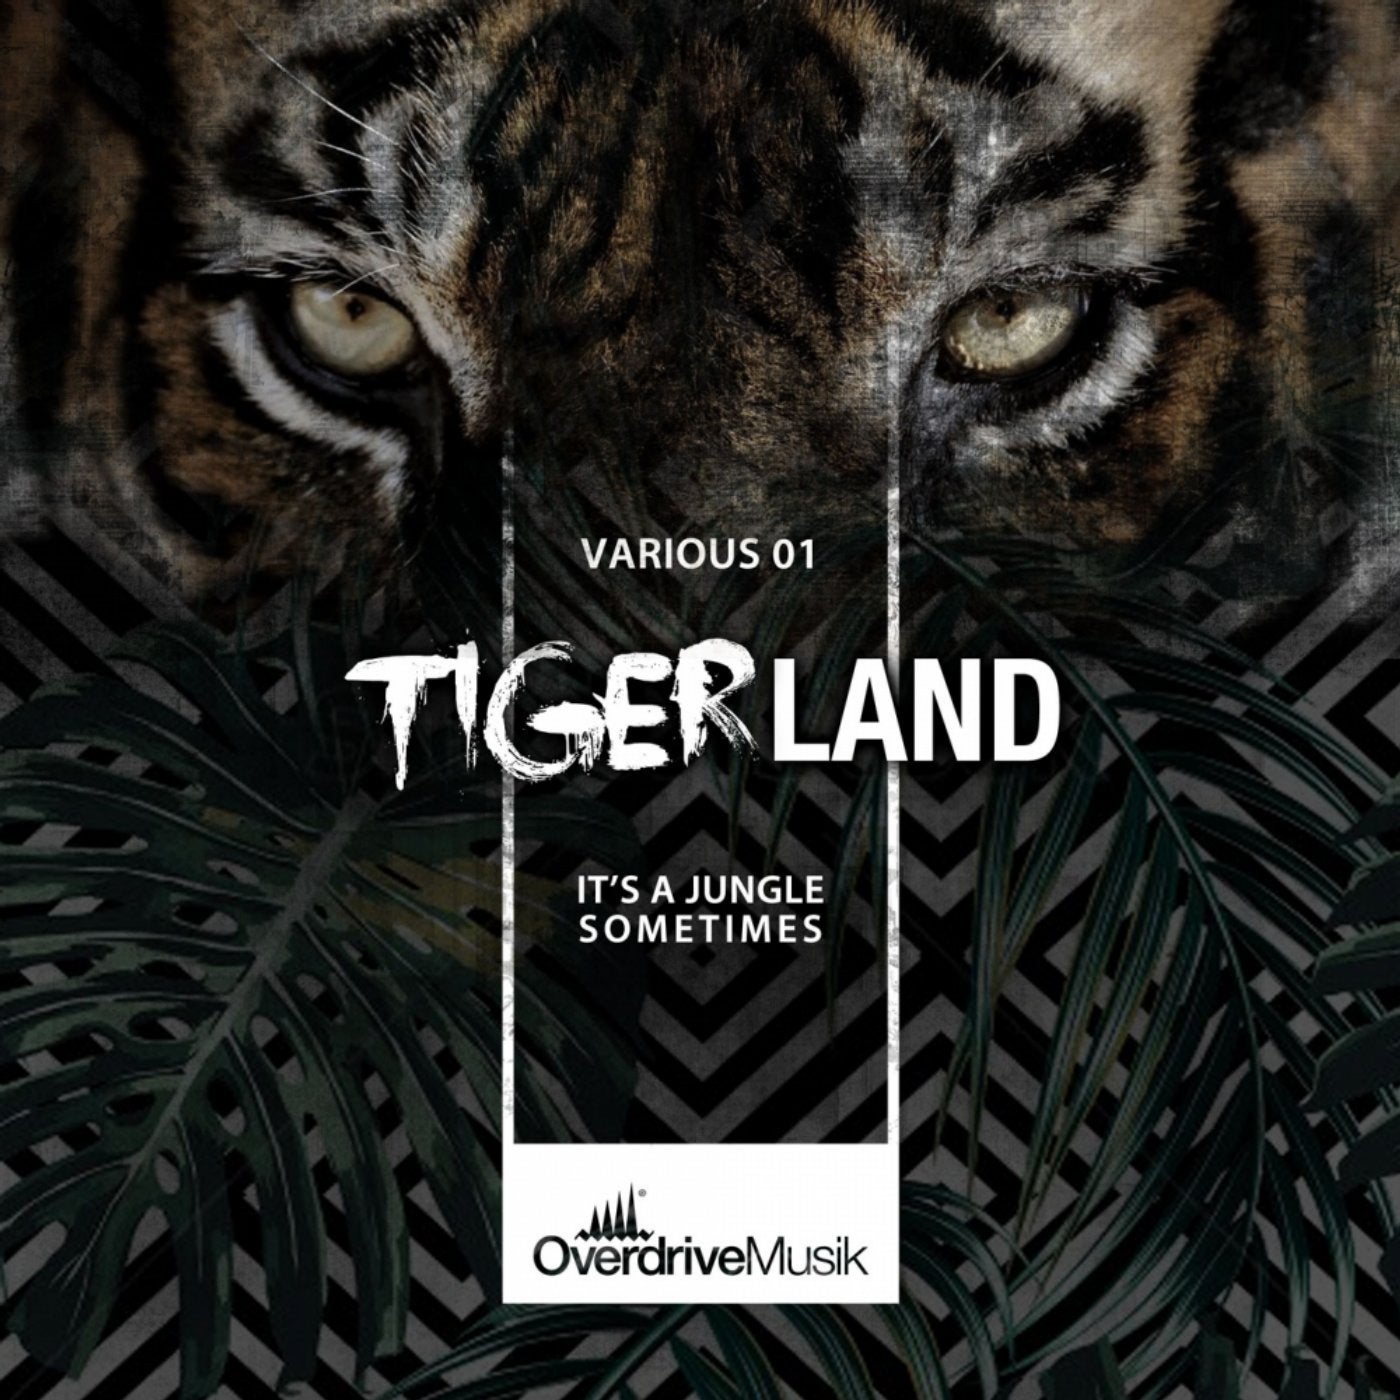 Tigerland 01